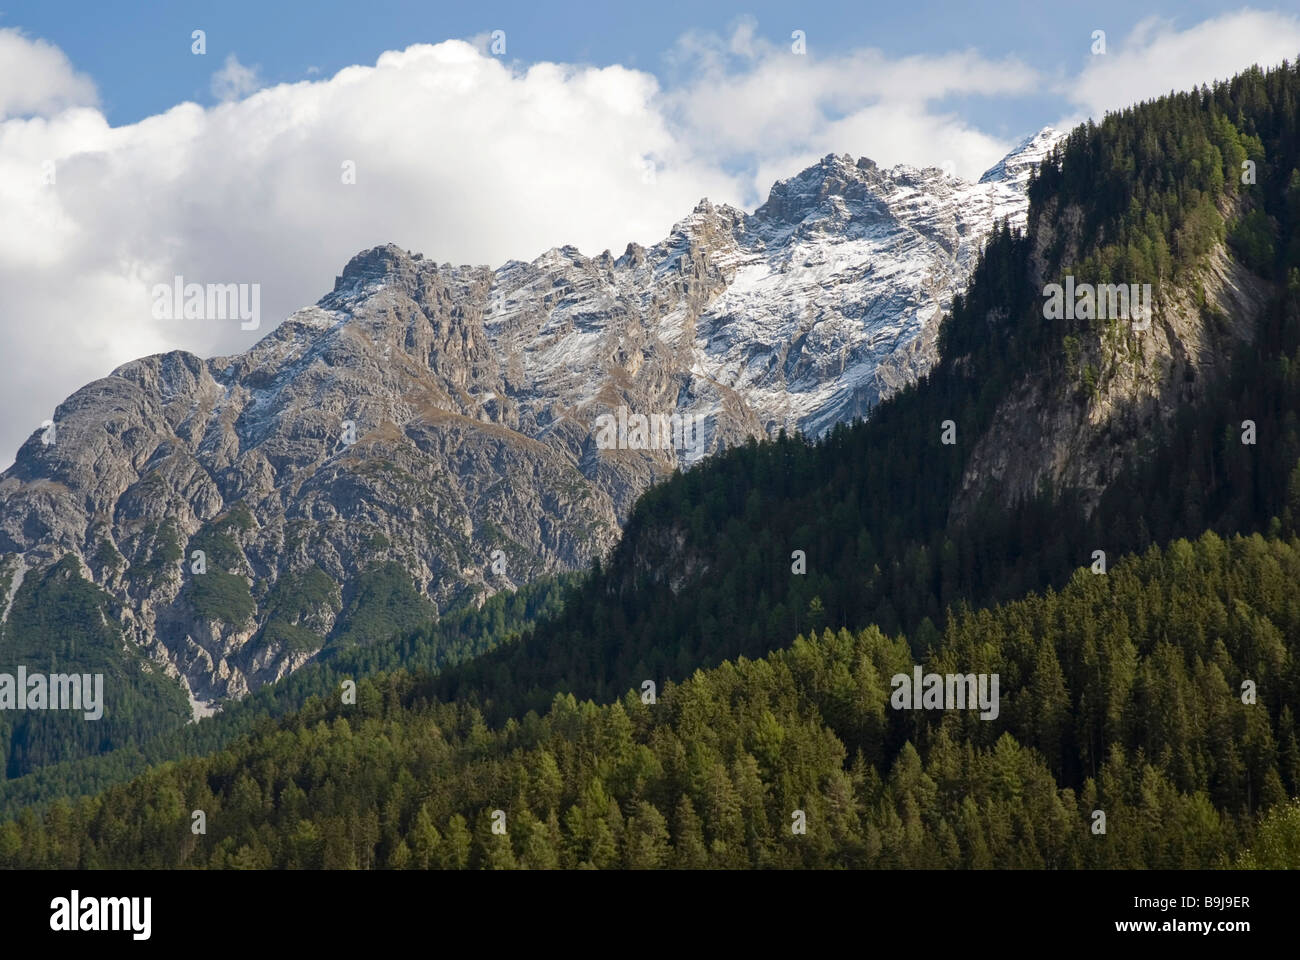 Mount Piz Zuort, 3119 metres above sea level, and wooded slopes in the Unterengadin Dolomites, Switzerland, Europe Stock Photo